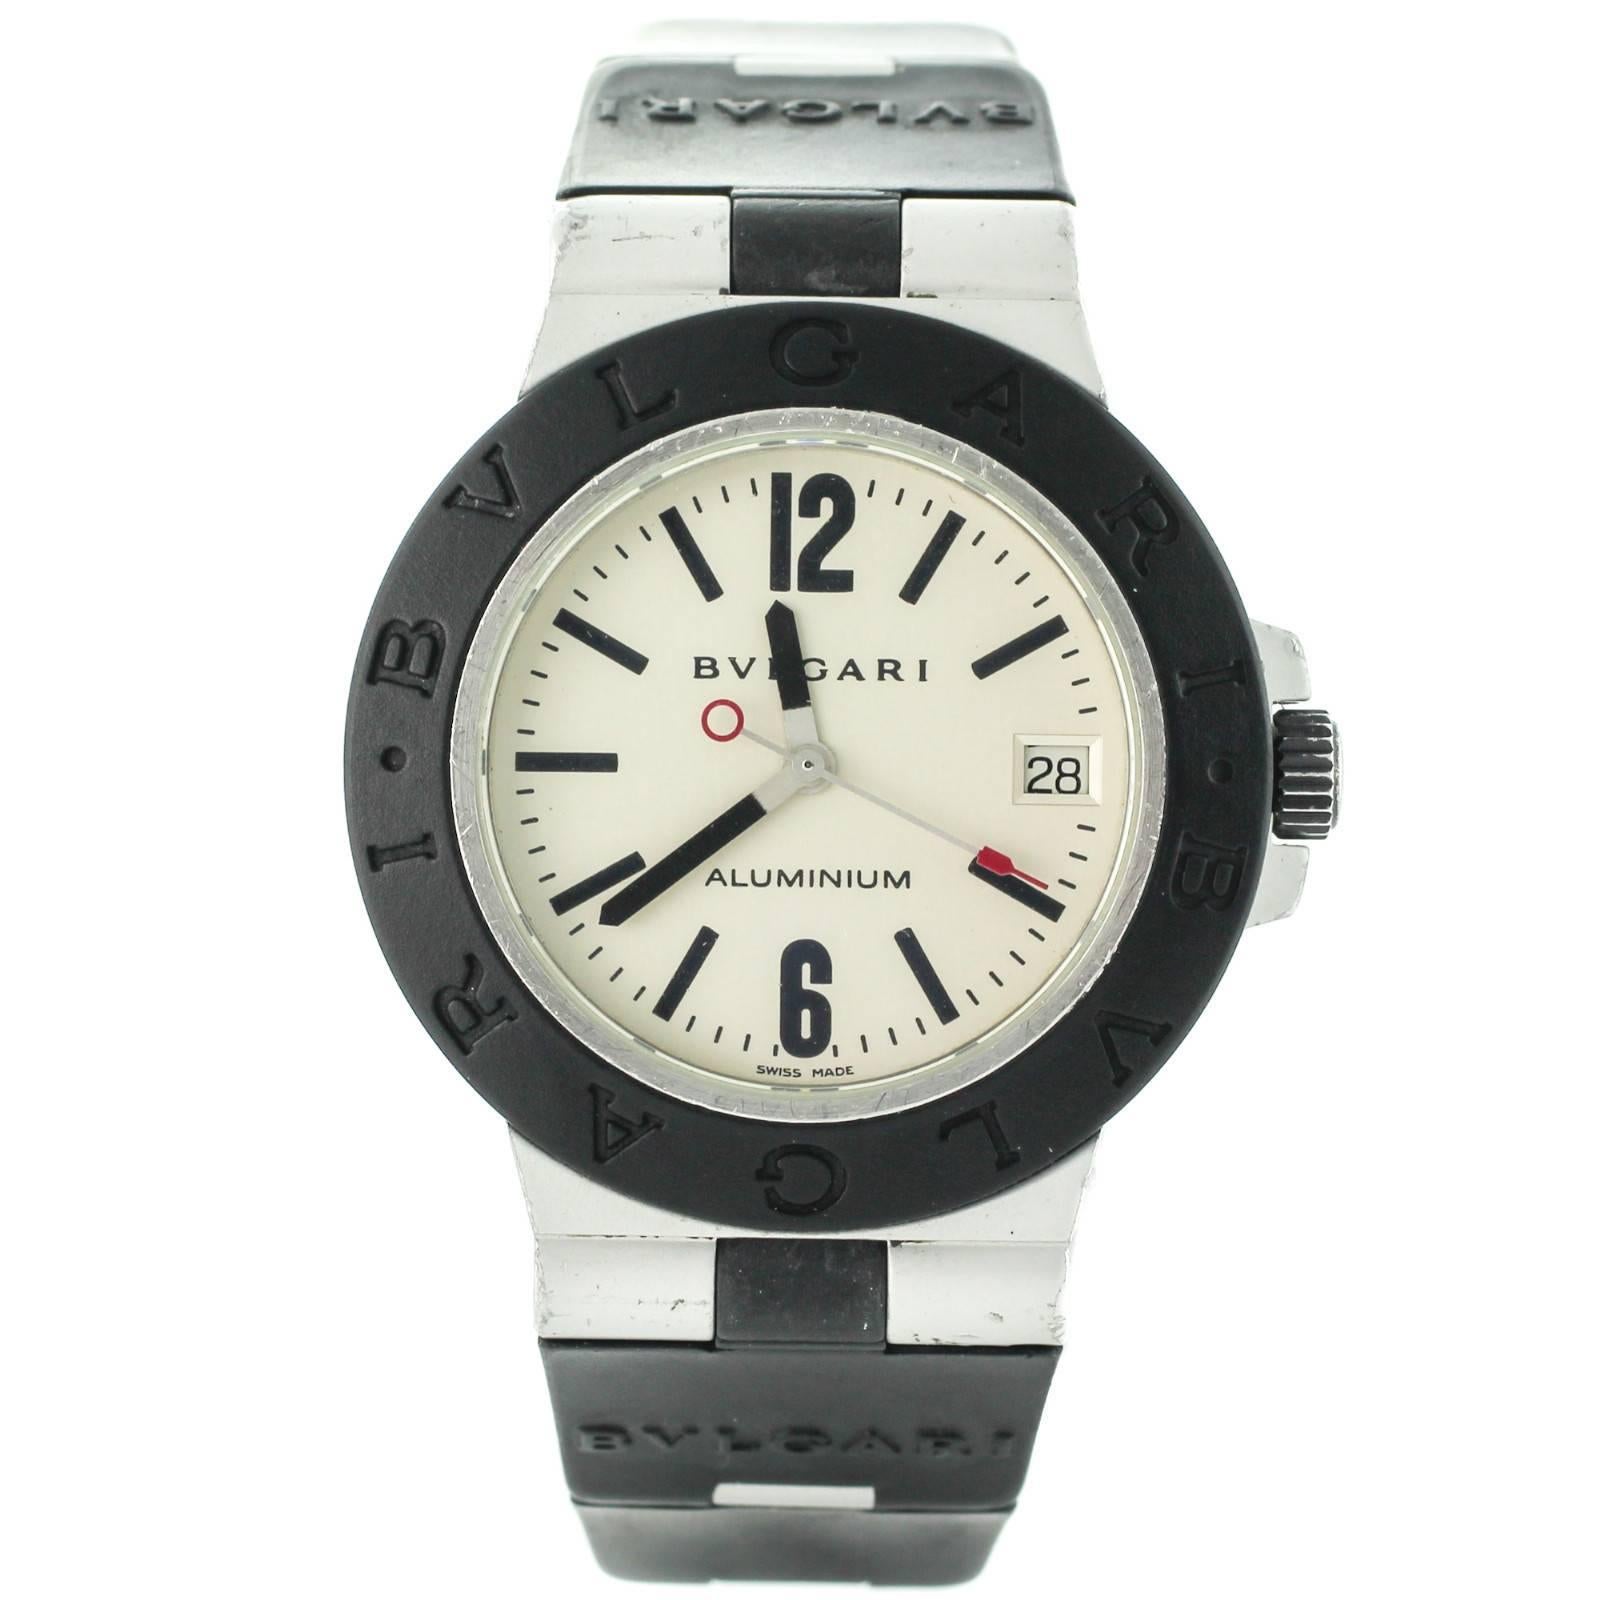 Bvlgari Aluminium AL38A Swiss Automatic Men's Watch